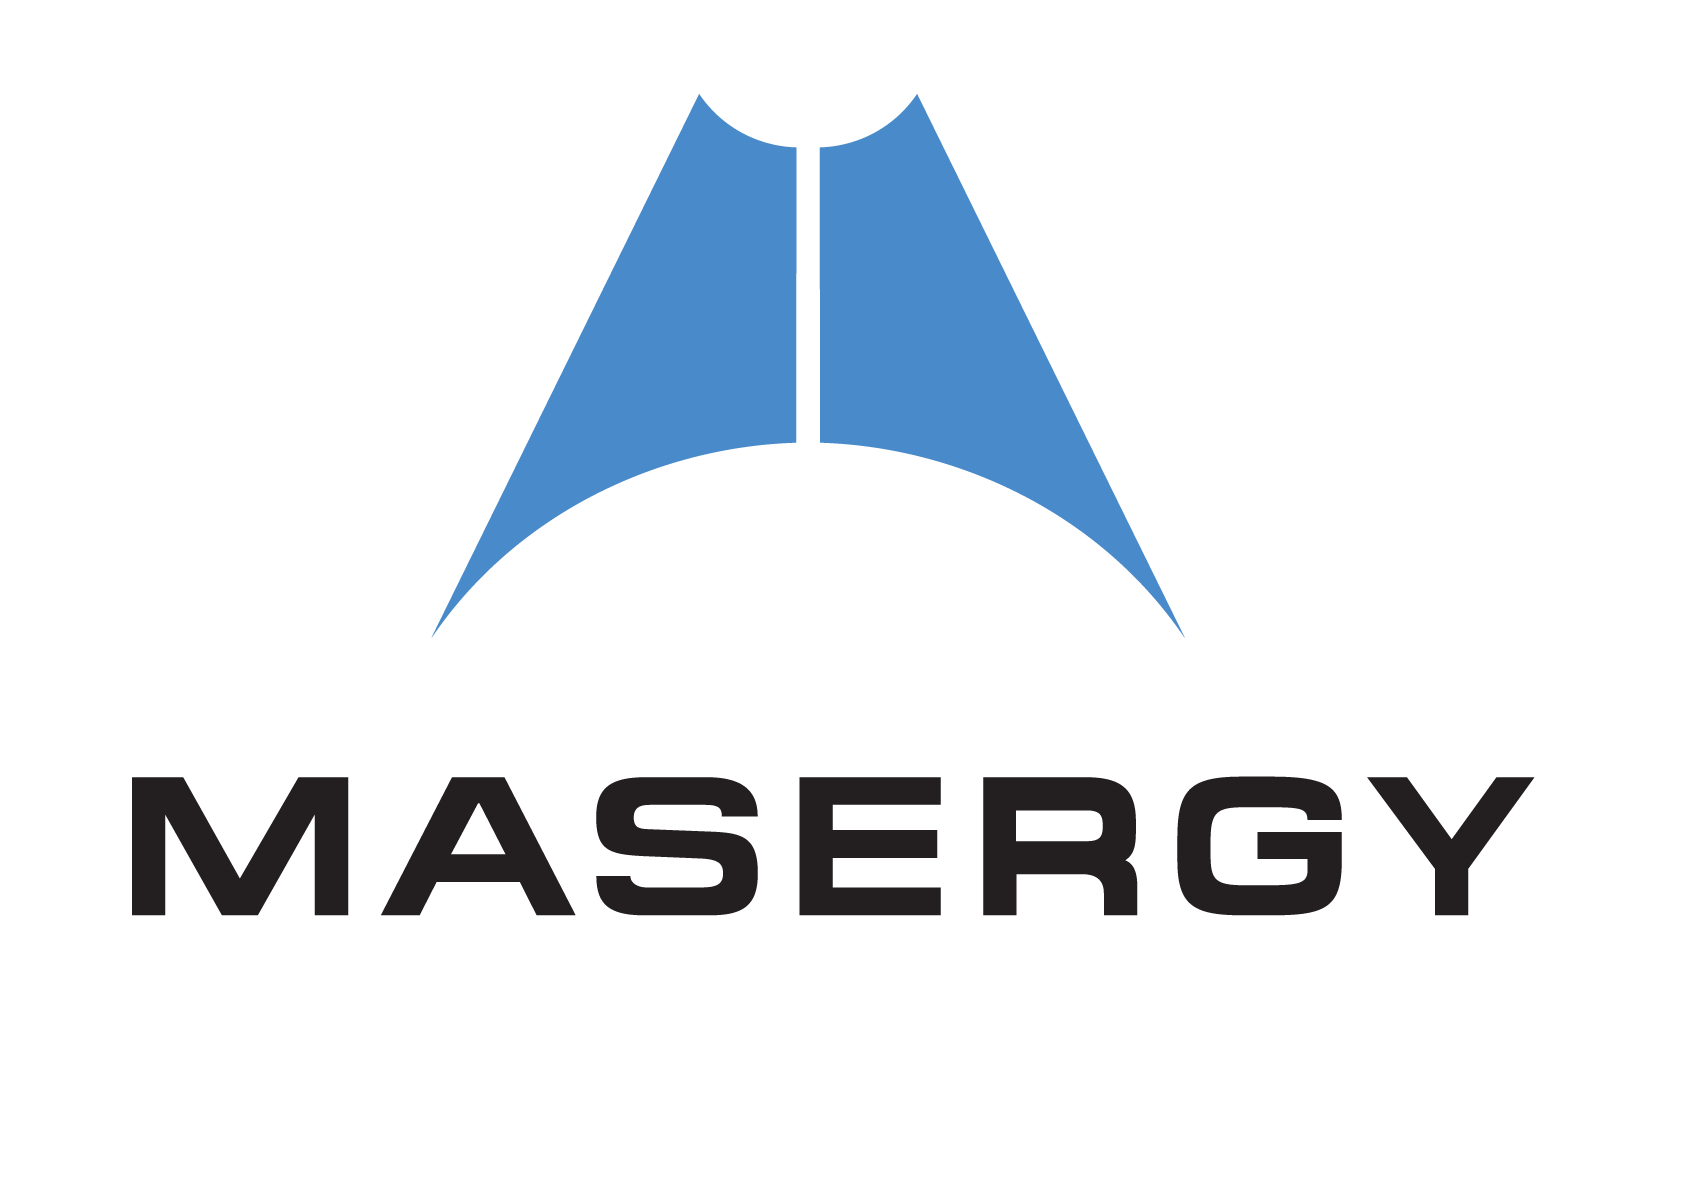 Masergy.png